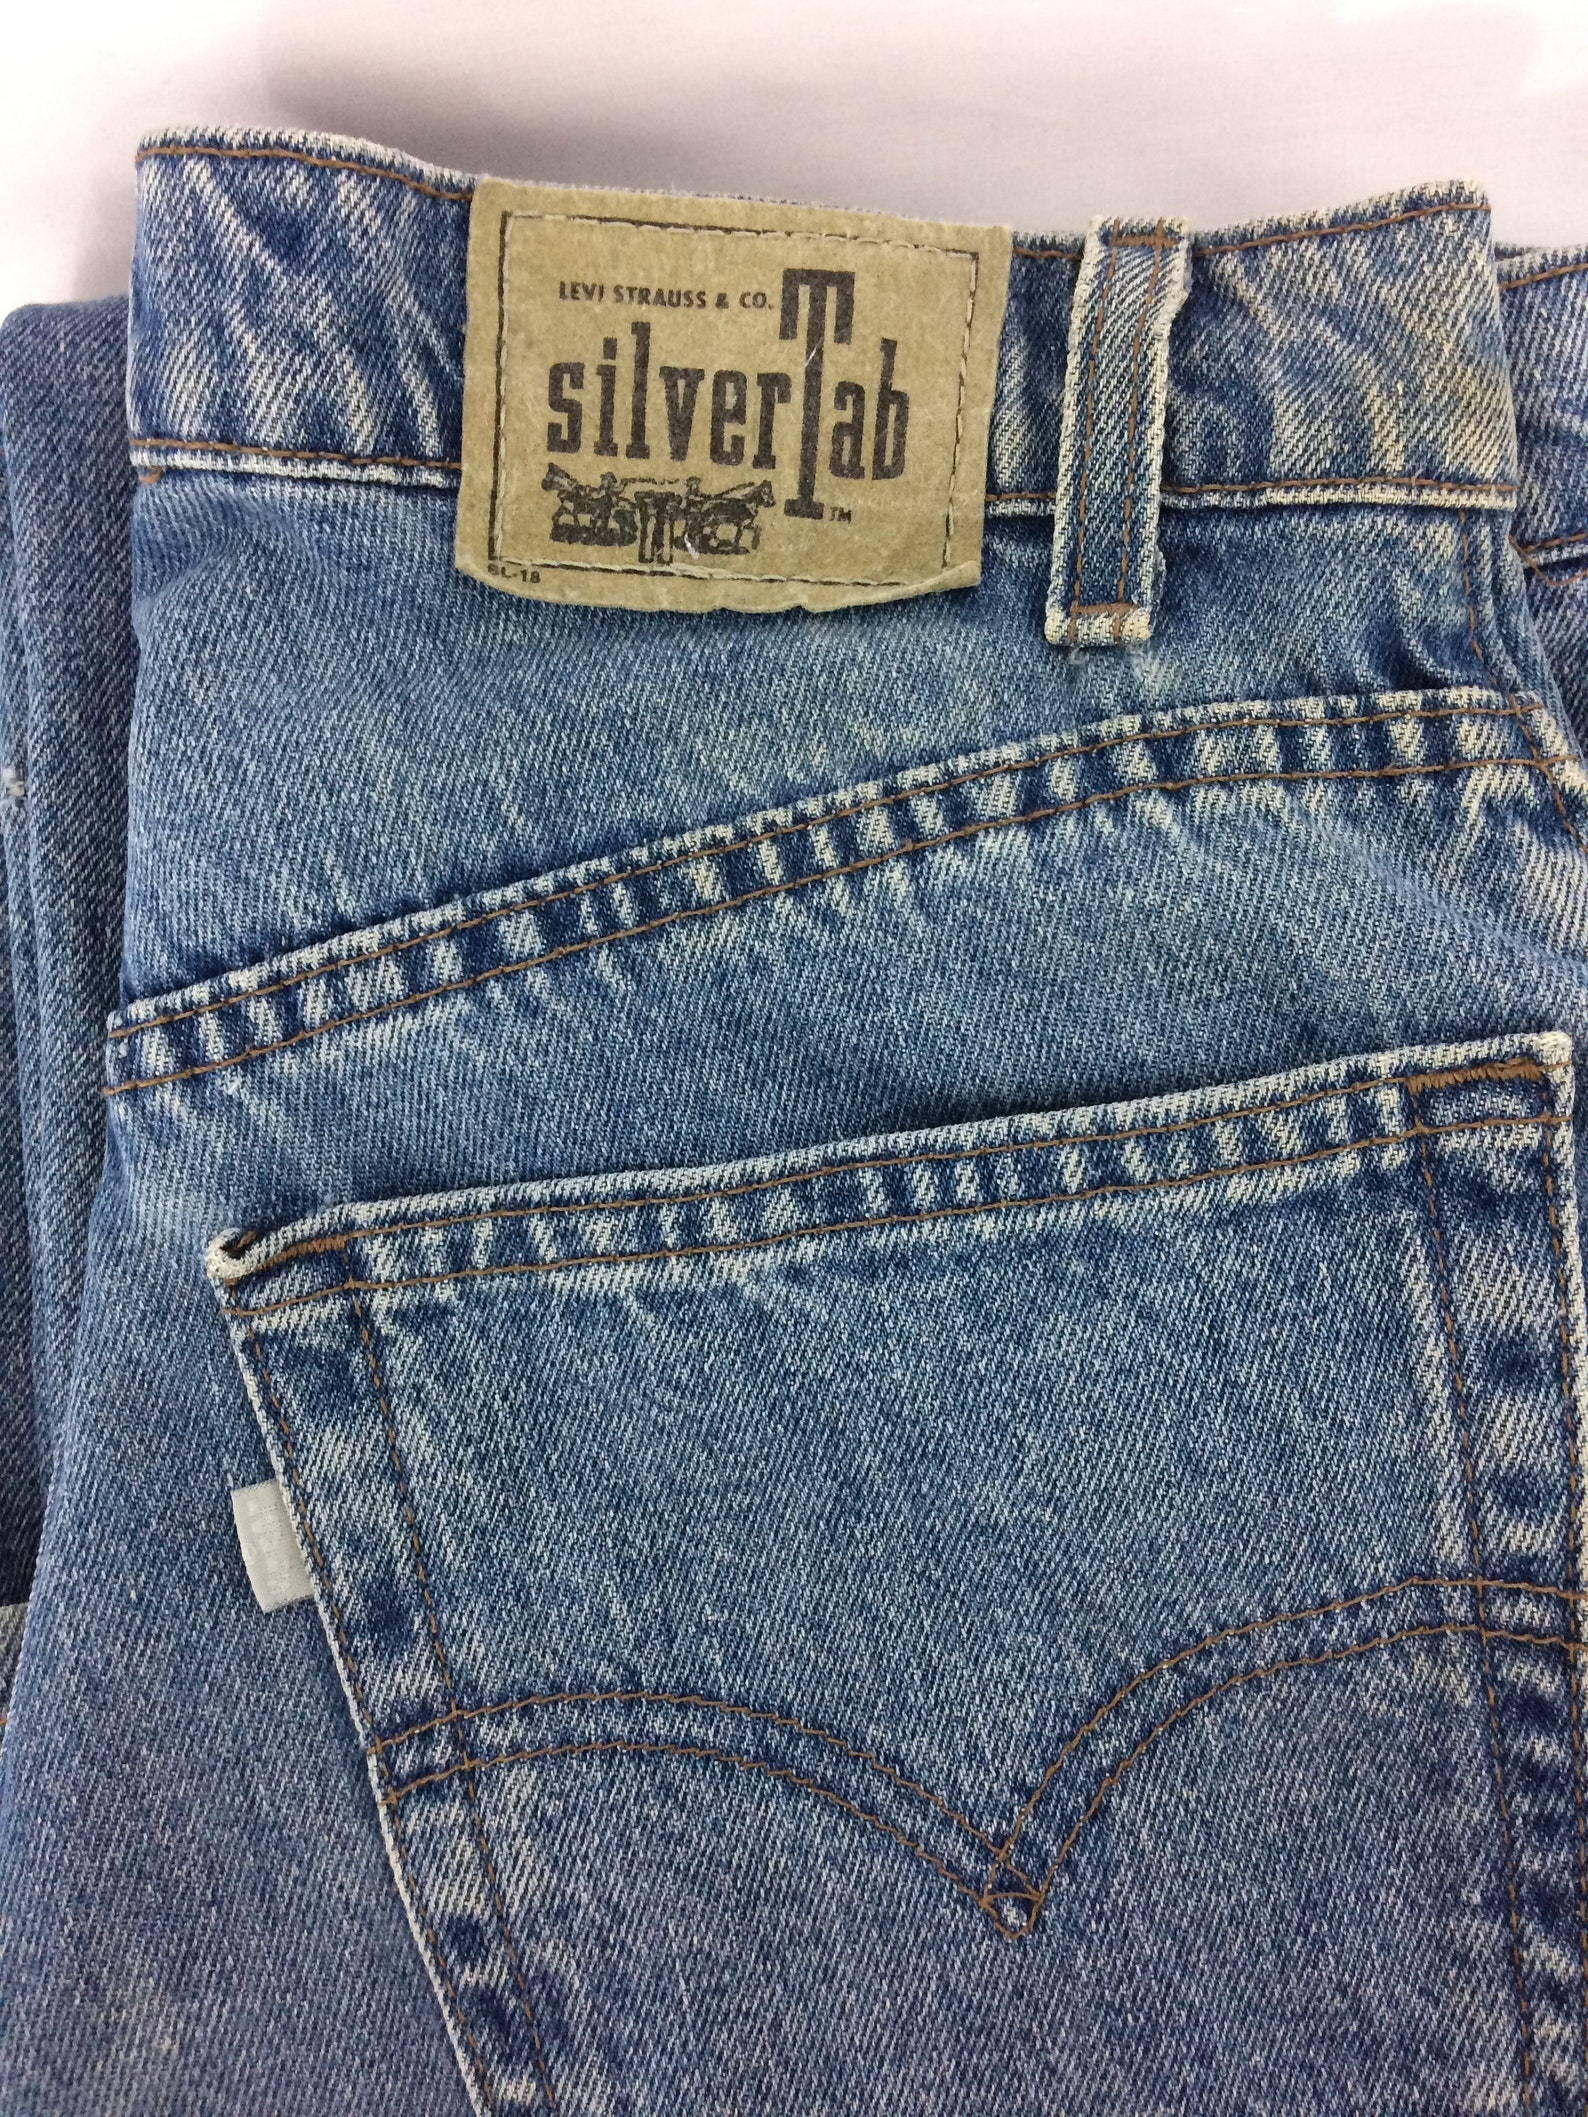 Sz 31 Vintage Levis Silvertab Women's Baggy Fit Jeans W31 | Etsy